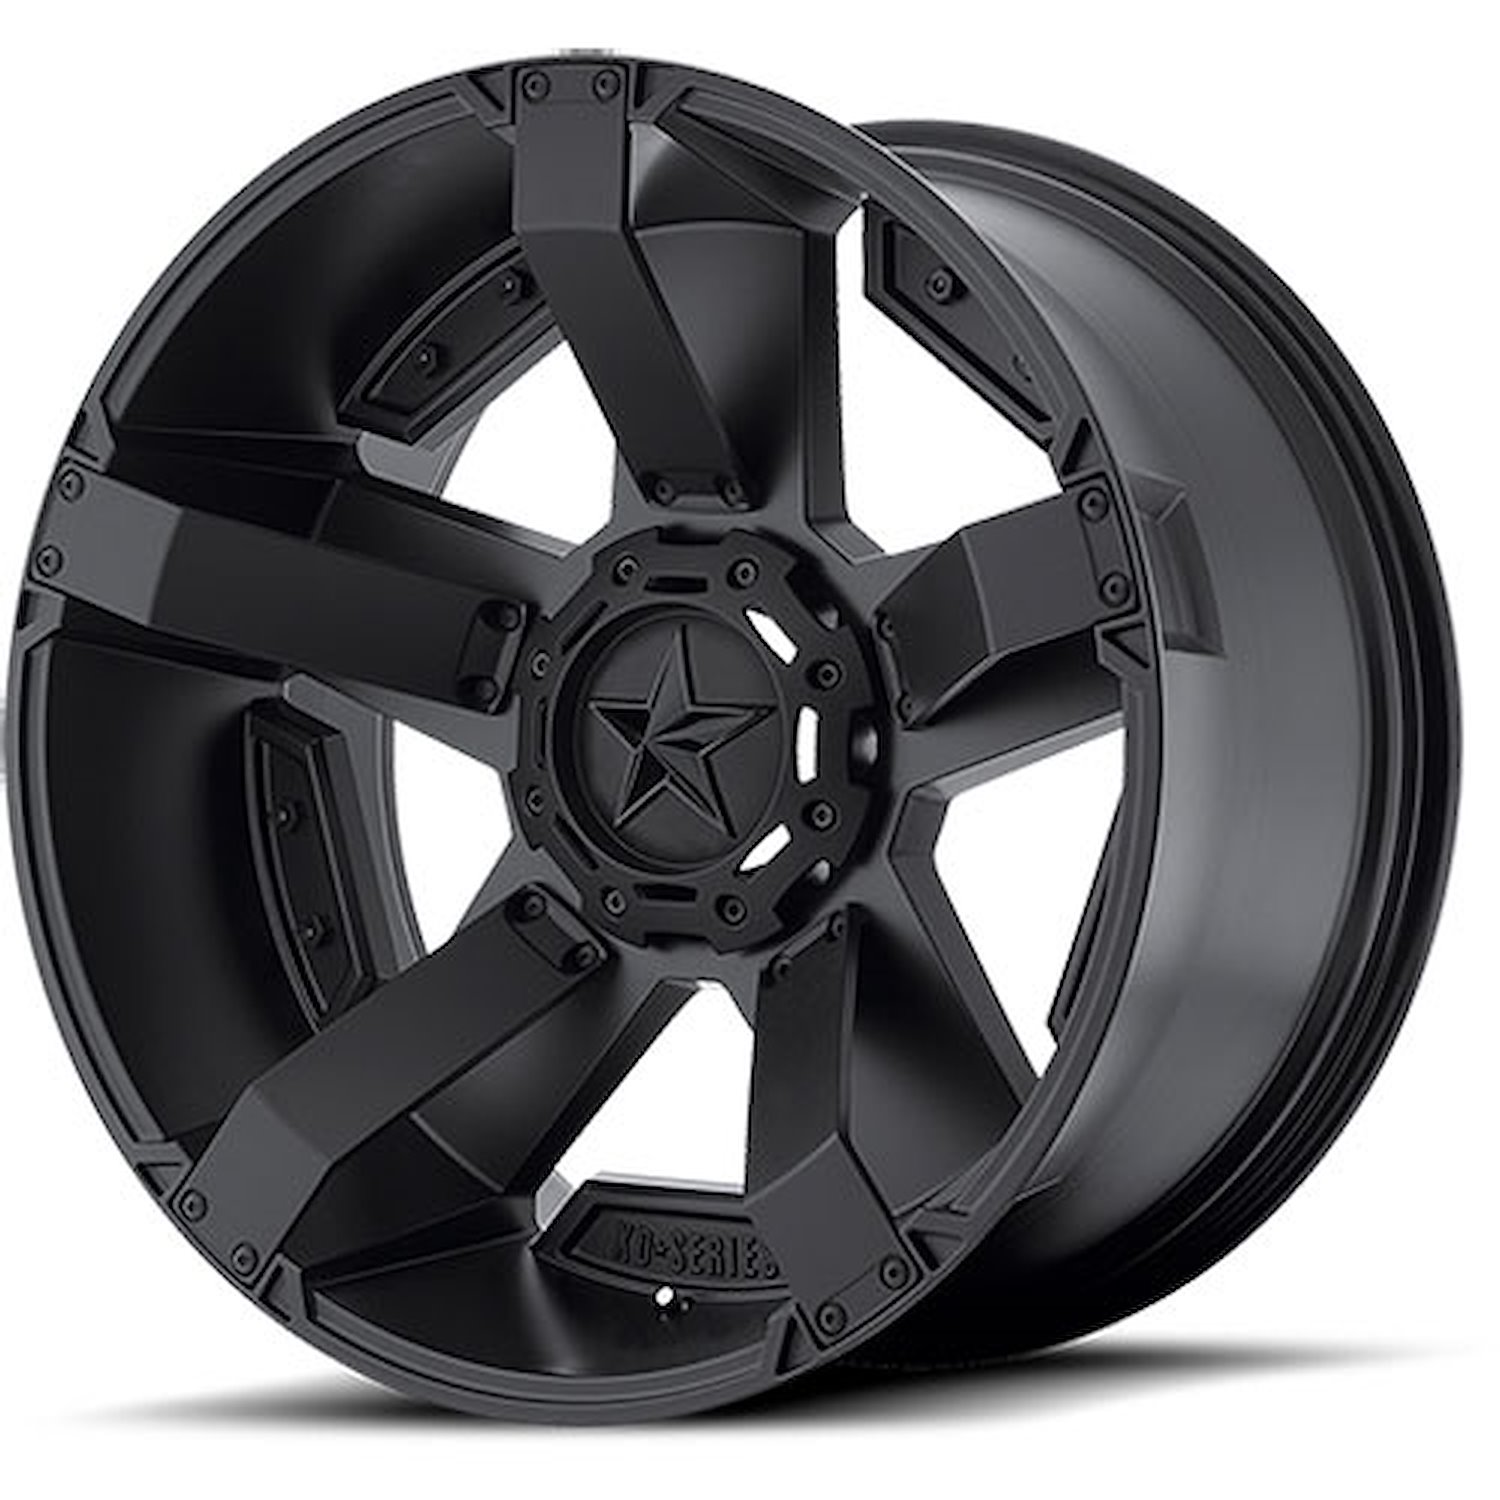 XD811 Series RS2 Rockstar Wheel Size: 20